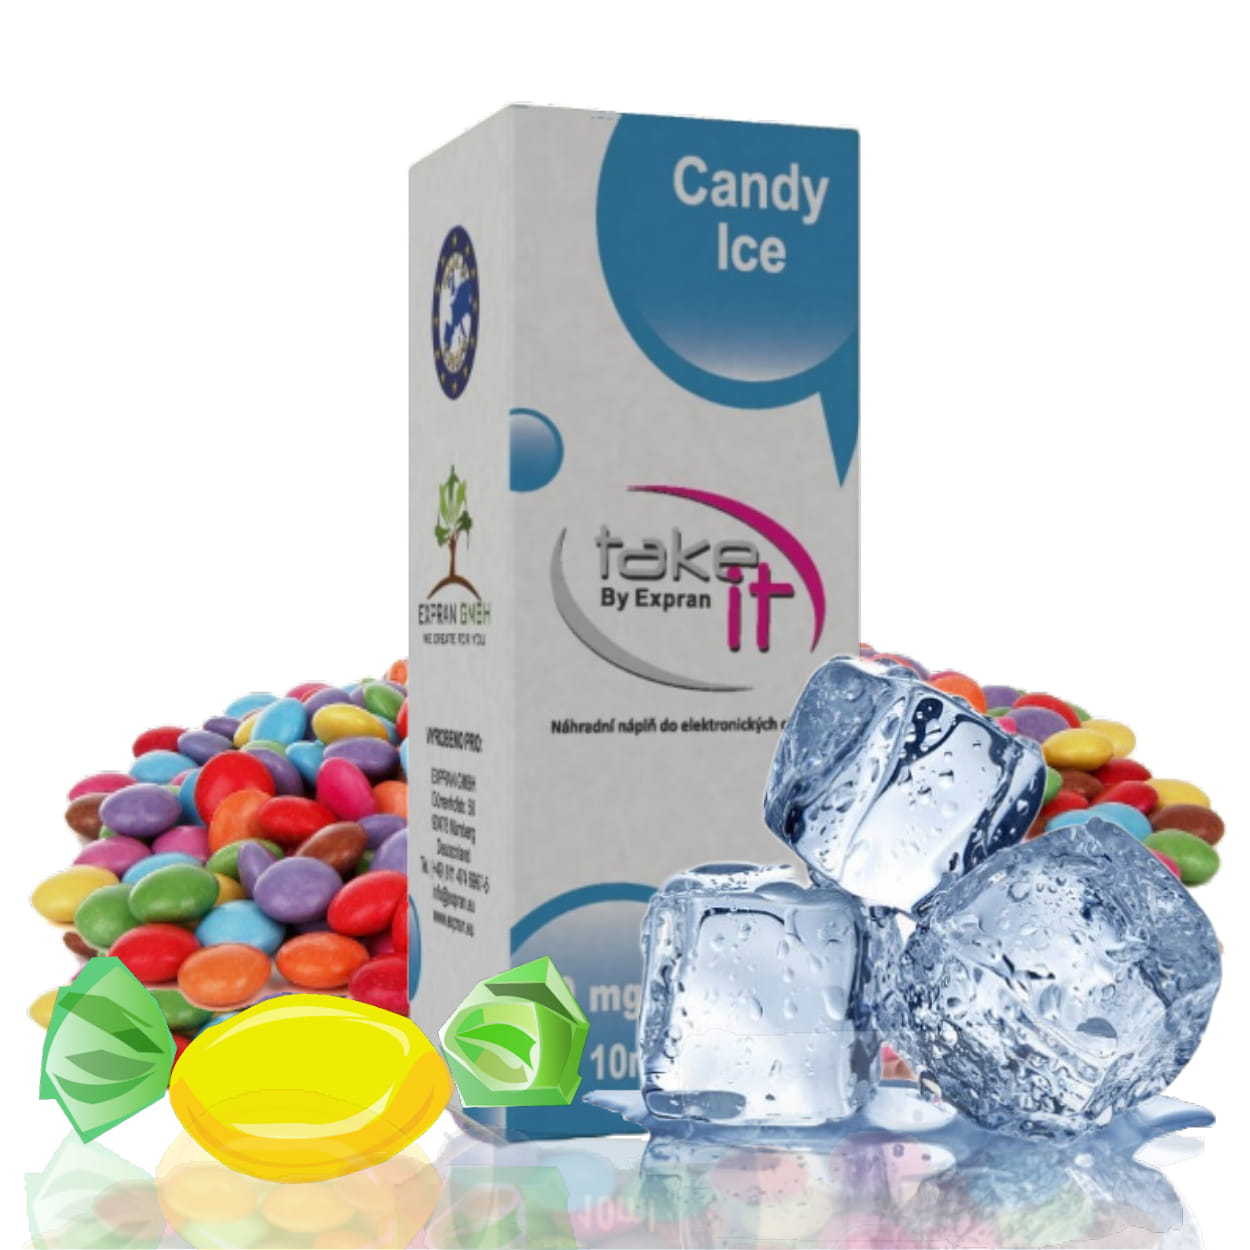 10 ml Take It - Candy Ice 12 mg/ml